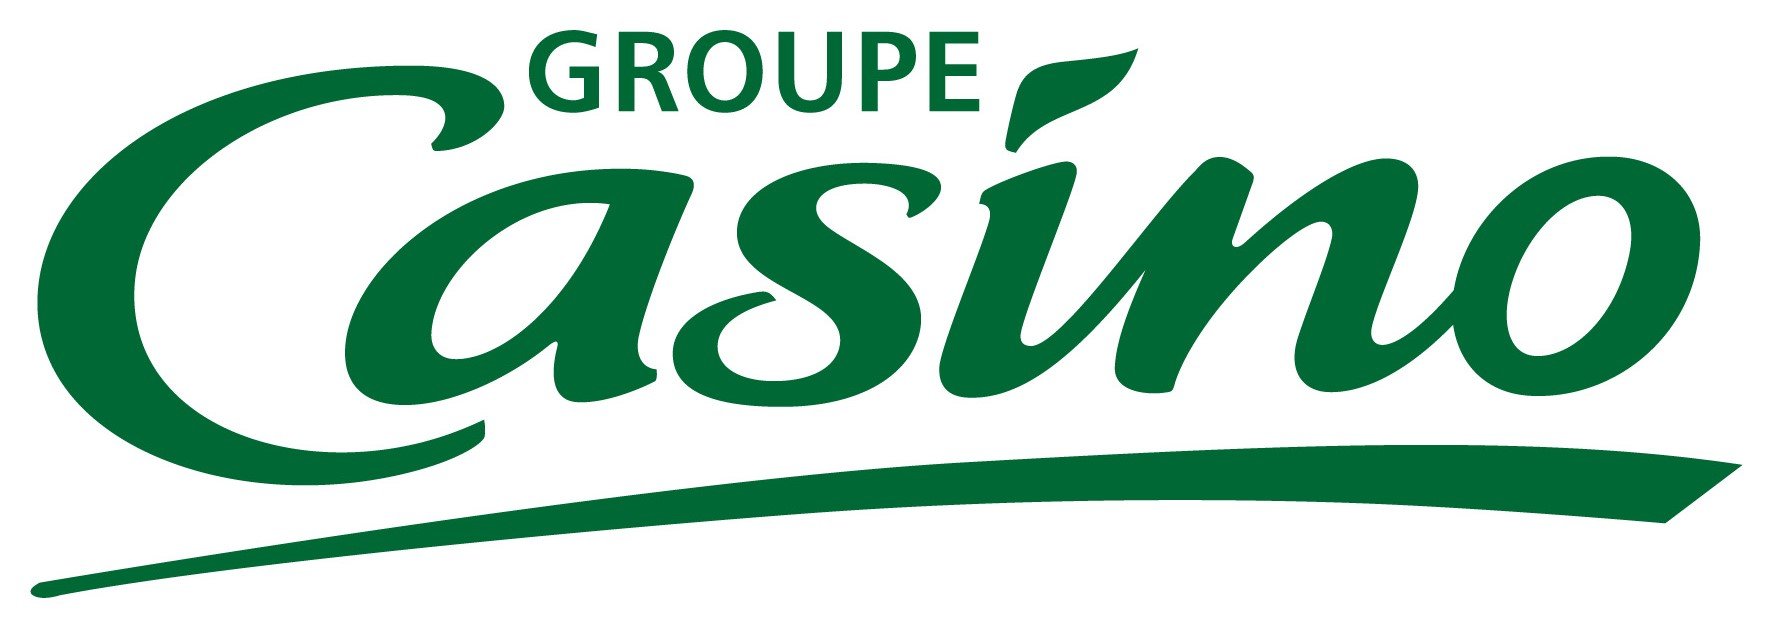 Logo Groupe Casino 